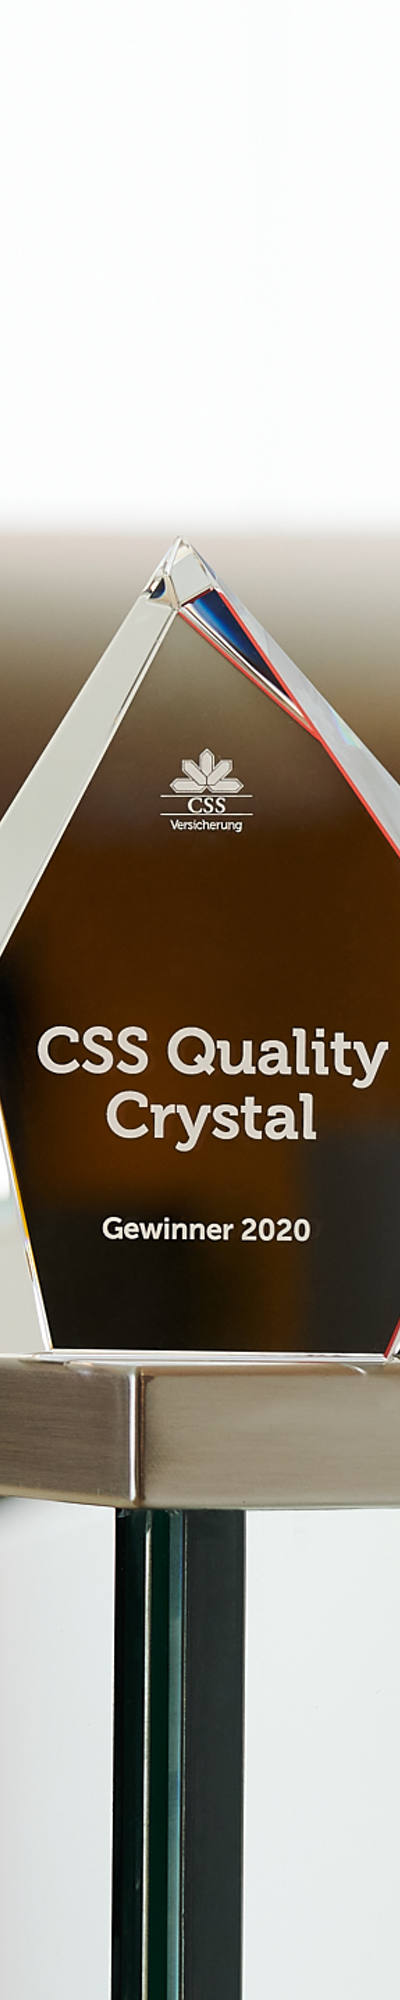 CSS Quality Crystal Award 2020